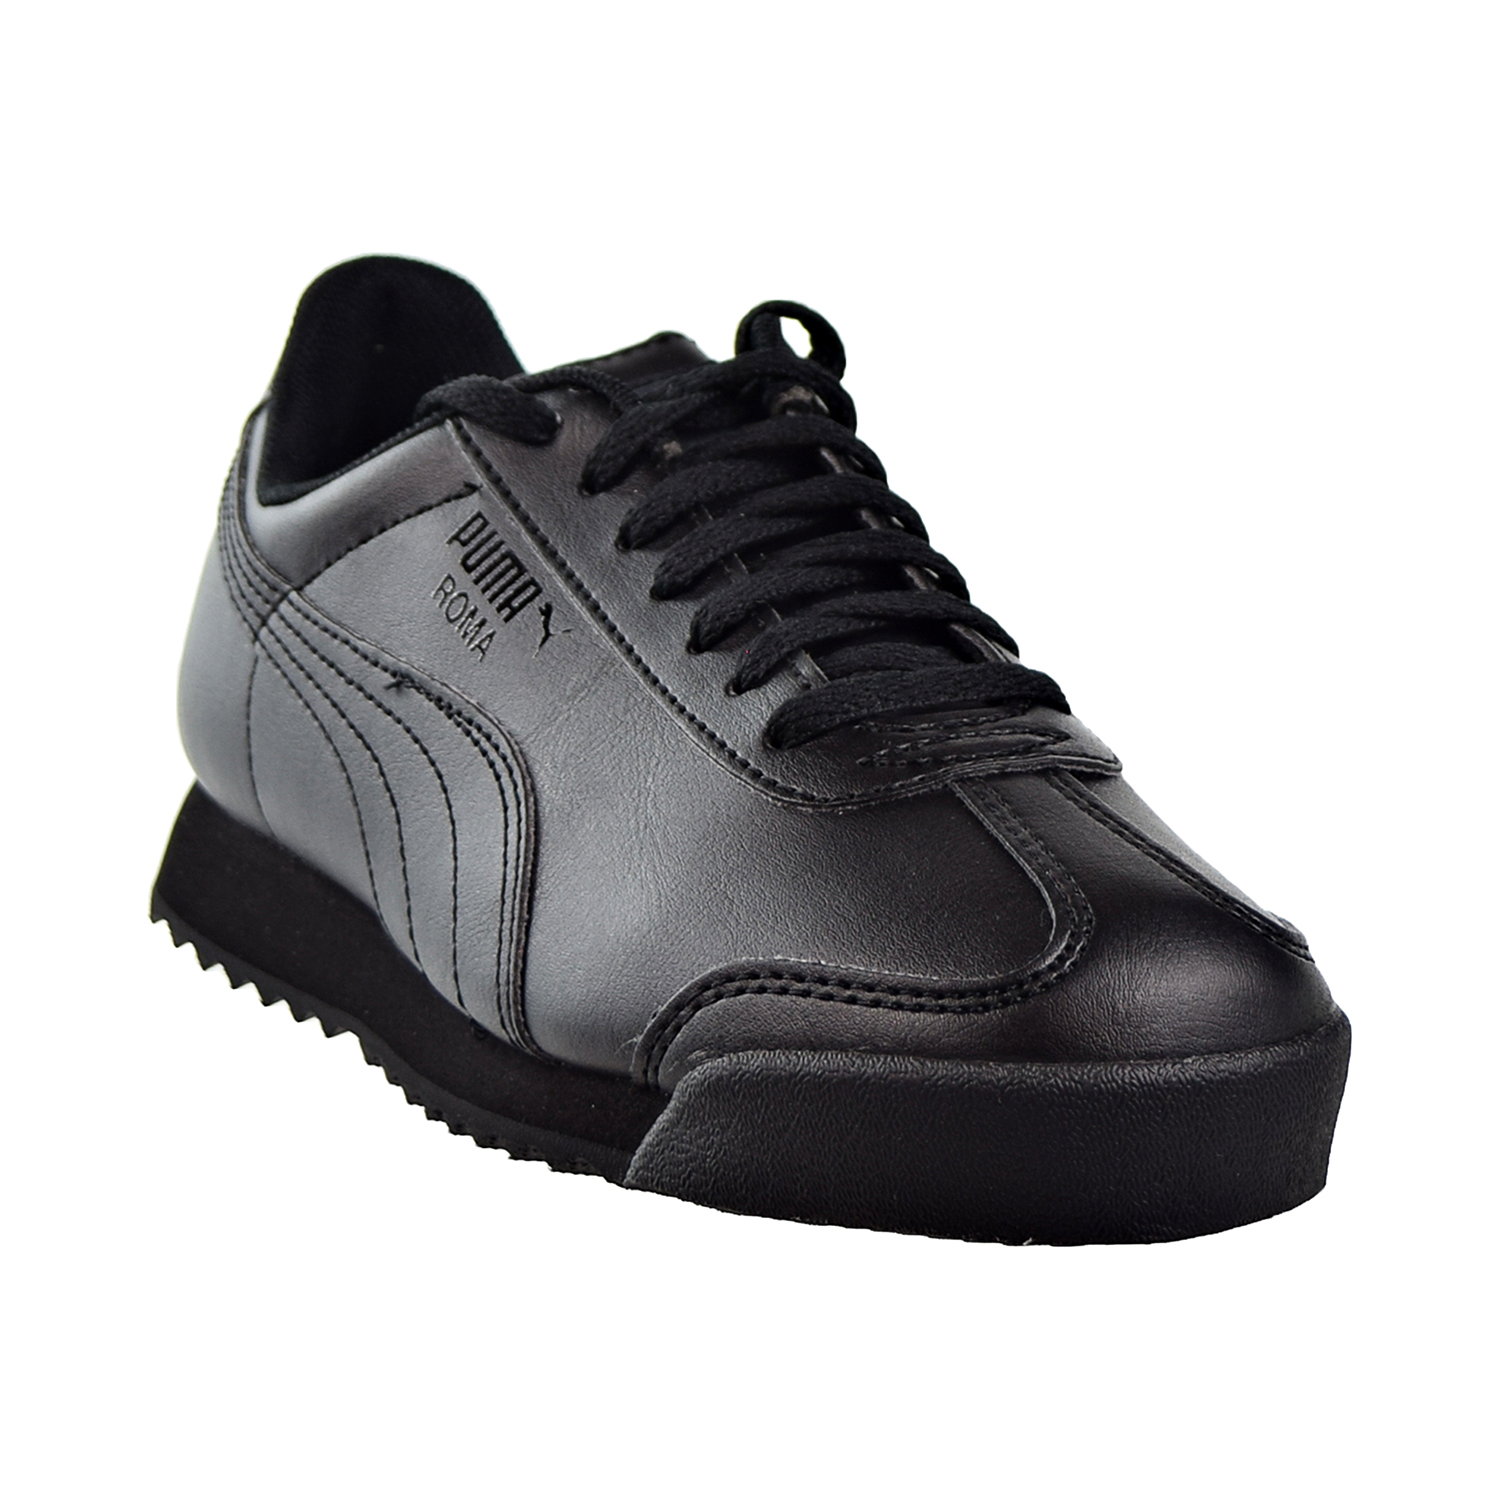 Puma Big Kids' ROMA BASIC JR Shoes Black/Black 354259-12 b Unisex Shoes ...